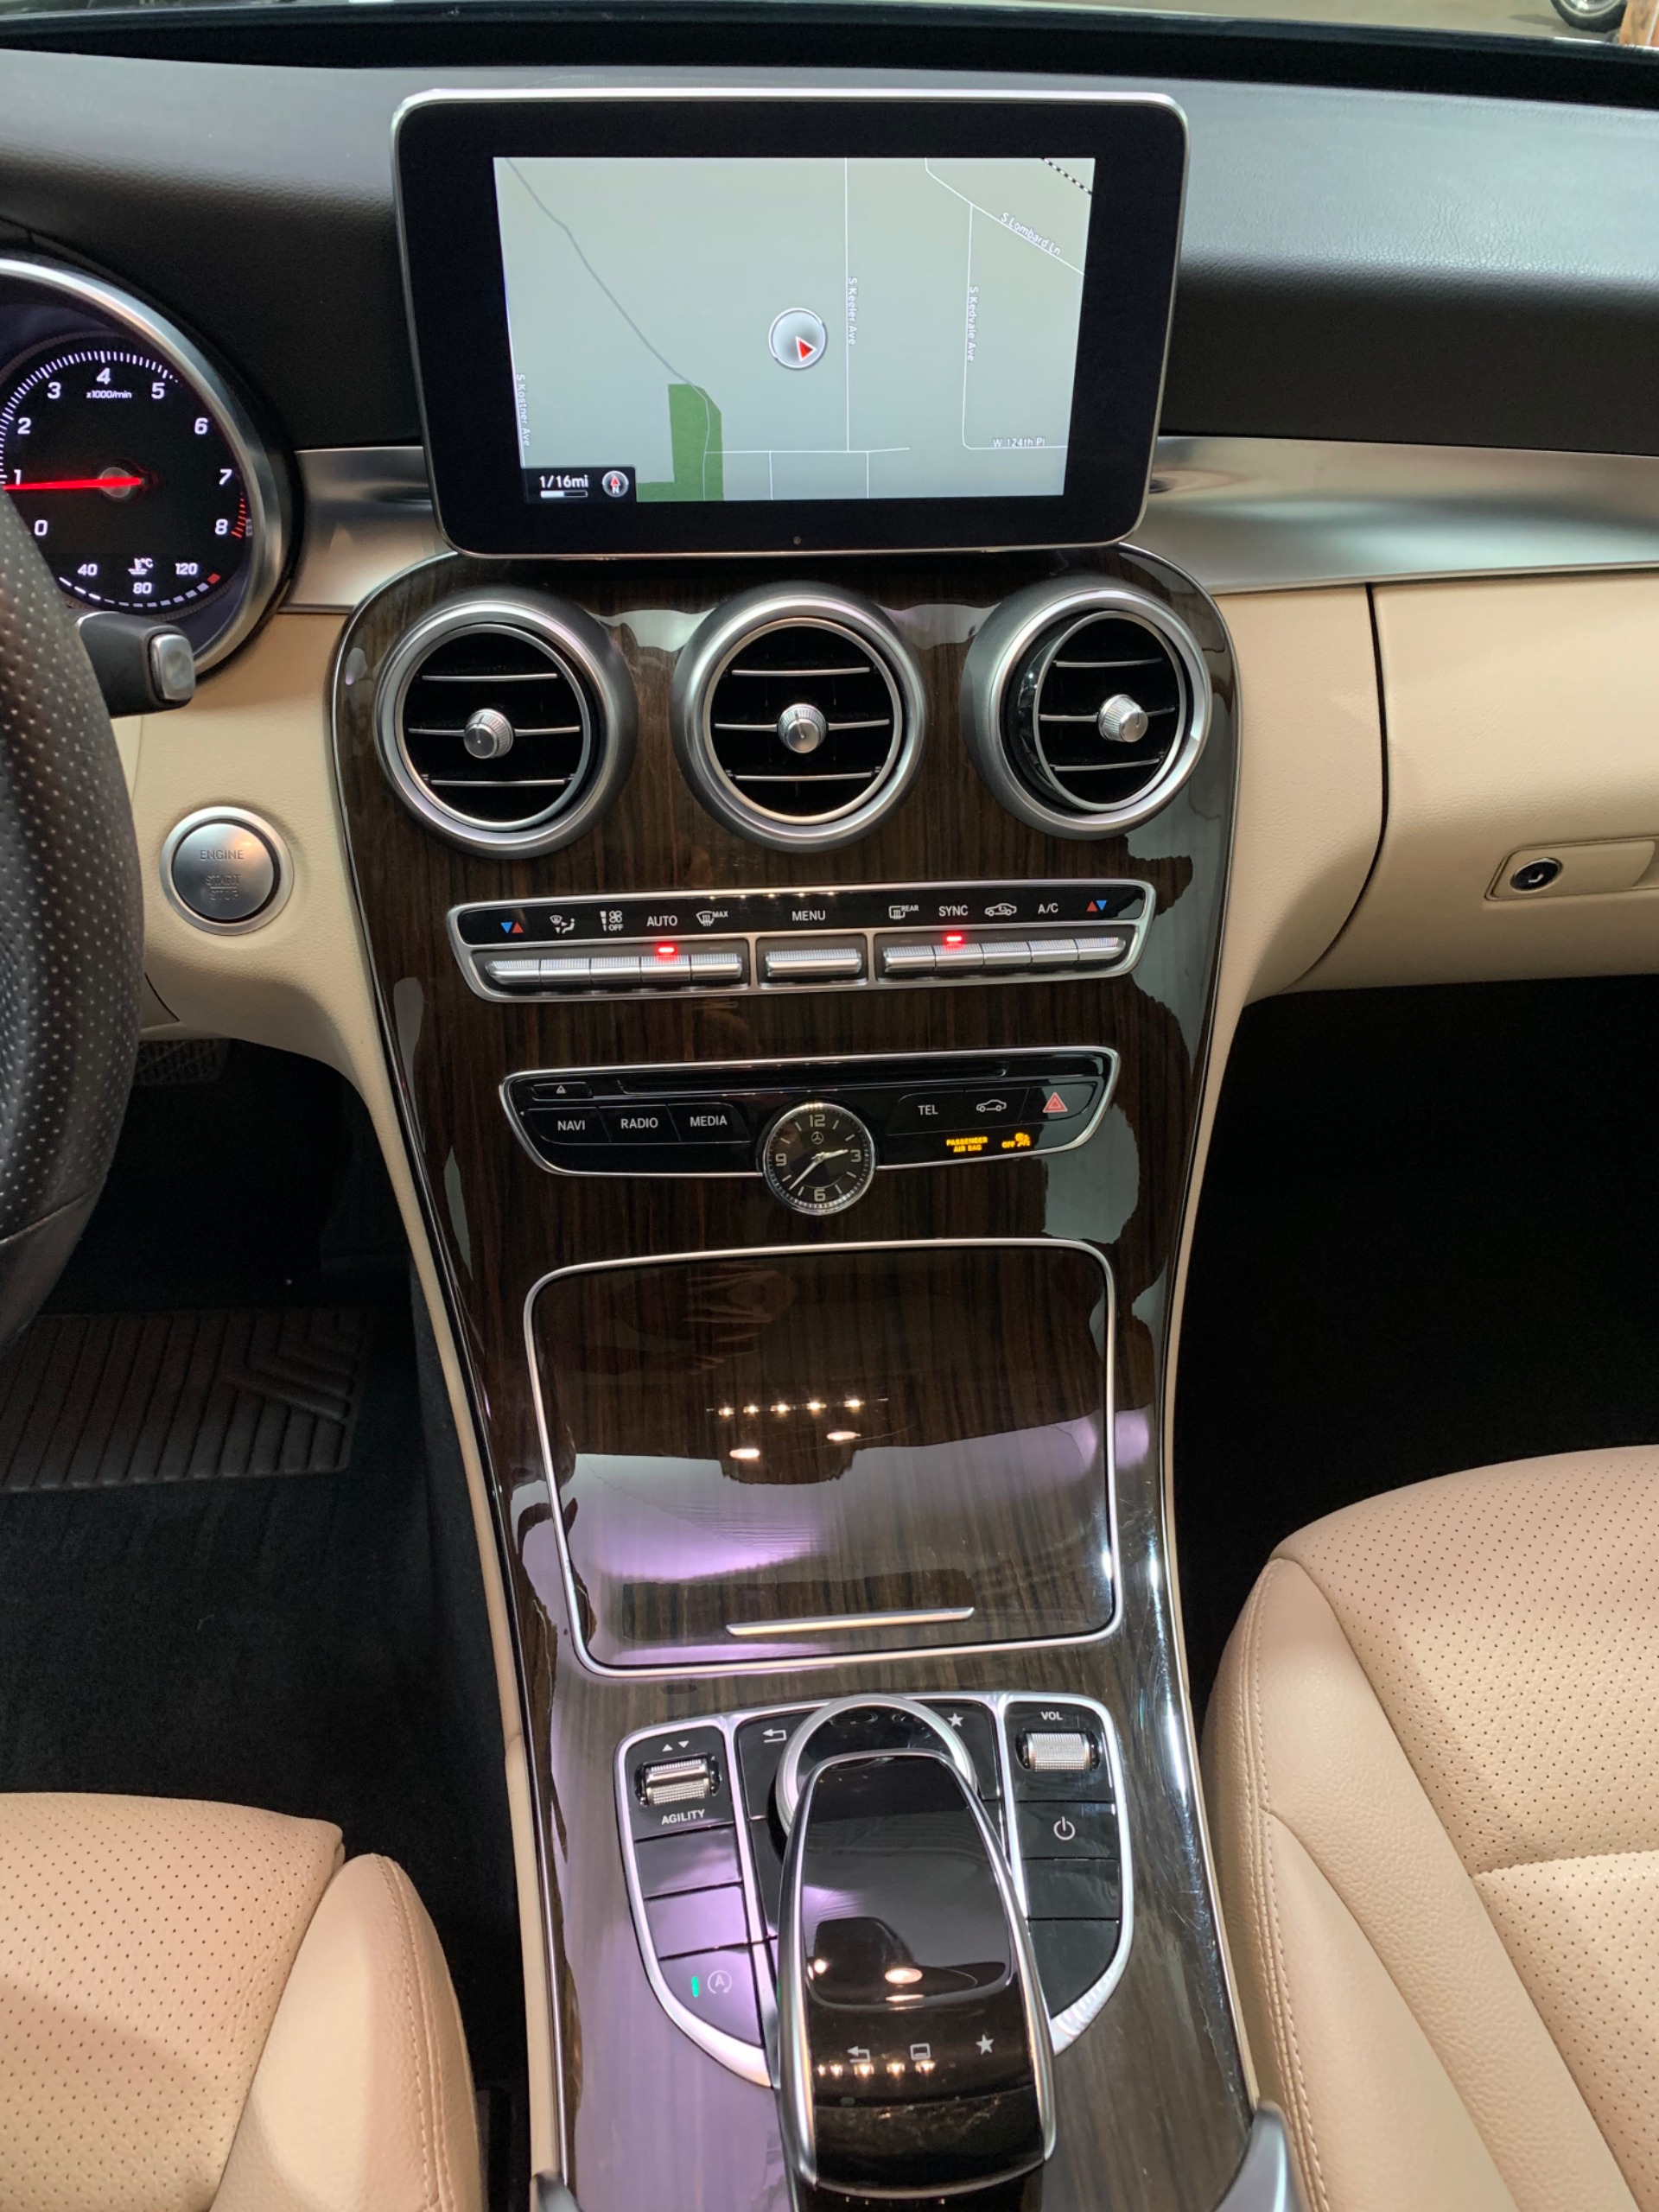 2015 Mercedes Benz C Class: C300 4Matic Full Review / Interior / Exterior -  YouTube